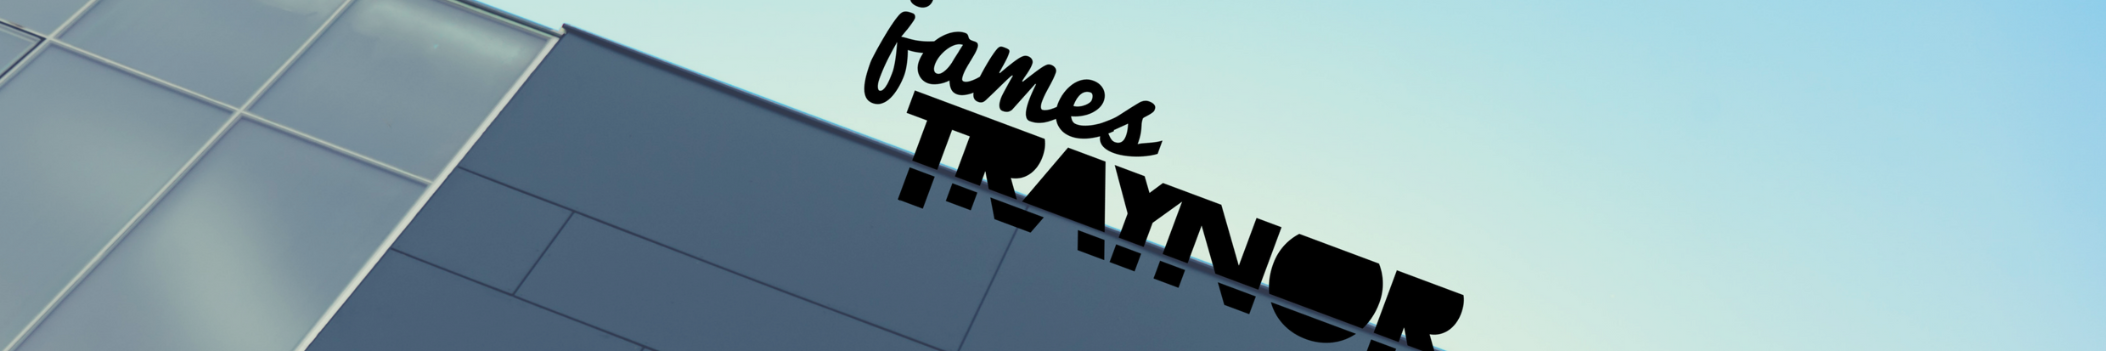 James Traynor